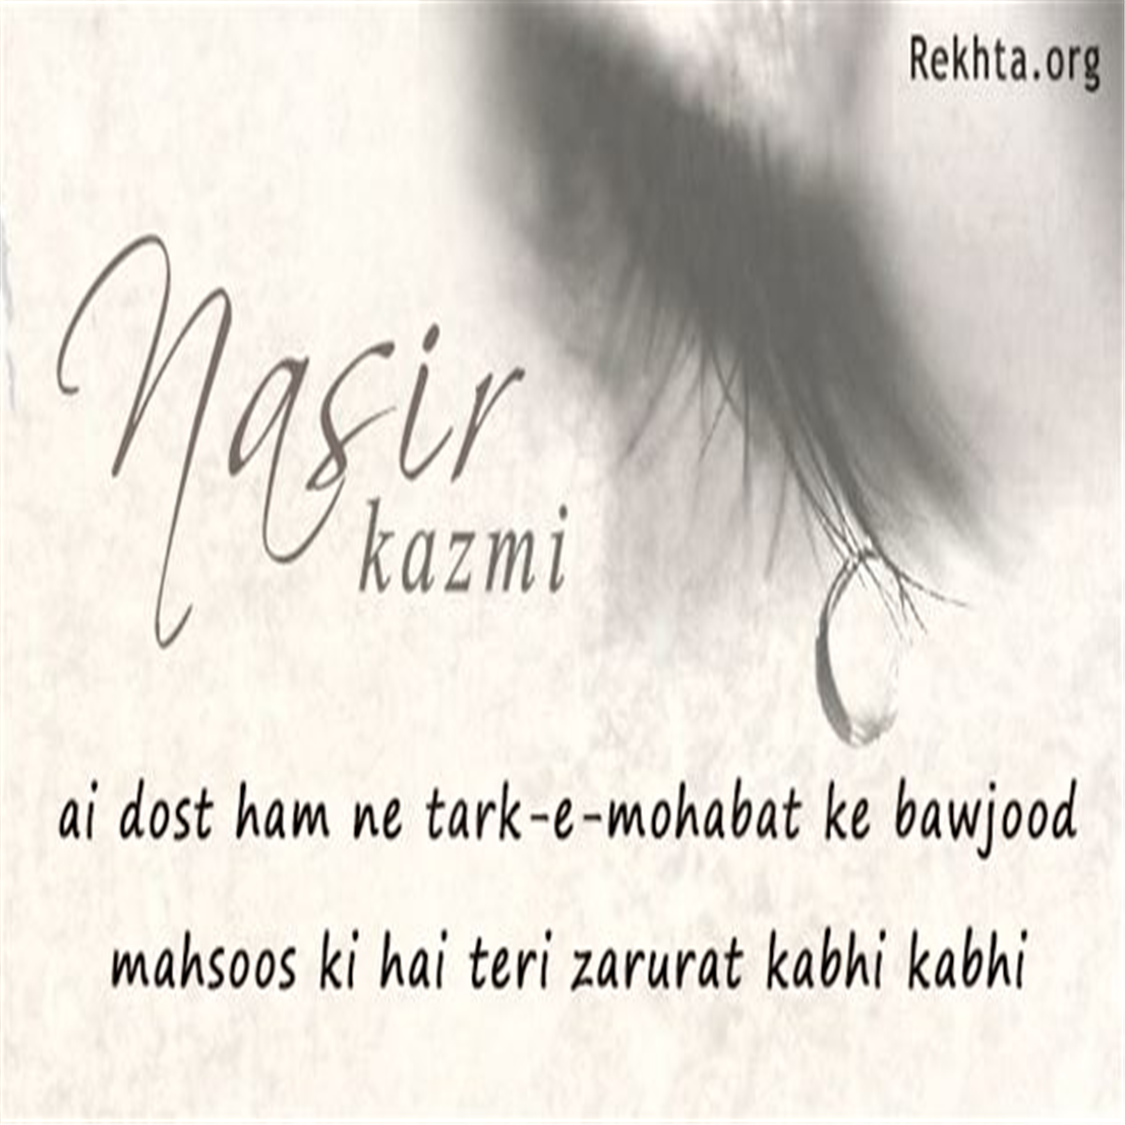 ai dost ham ne tark-e-mohabbat ke baavajuud-Nasir Kazmi